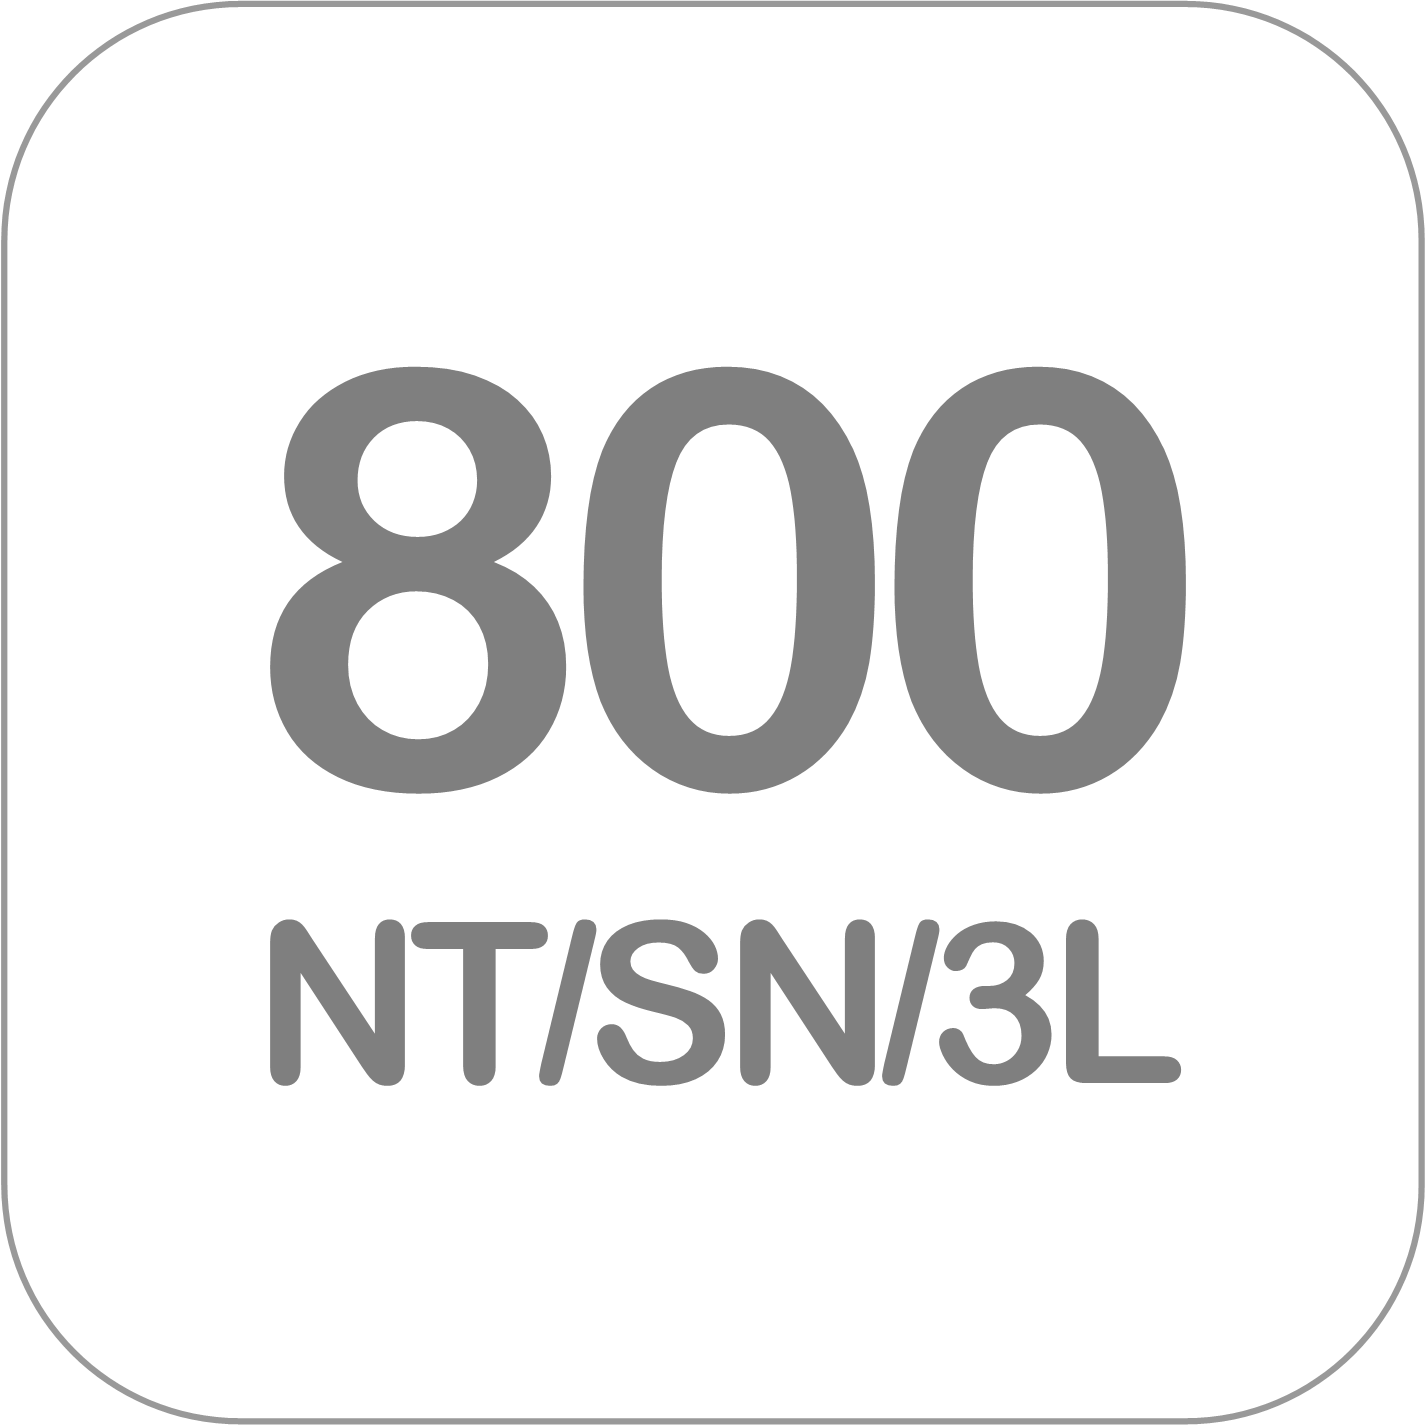 Volquete 800 NT/SN/3L